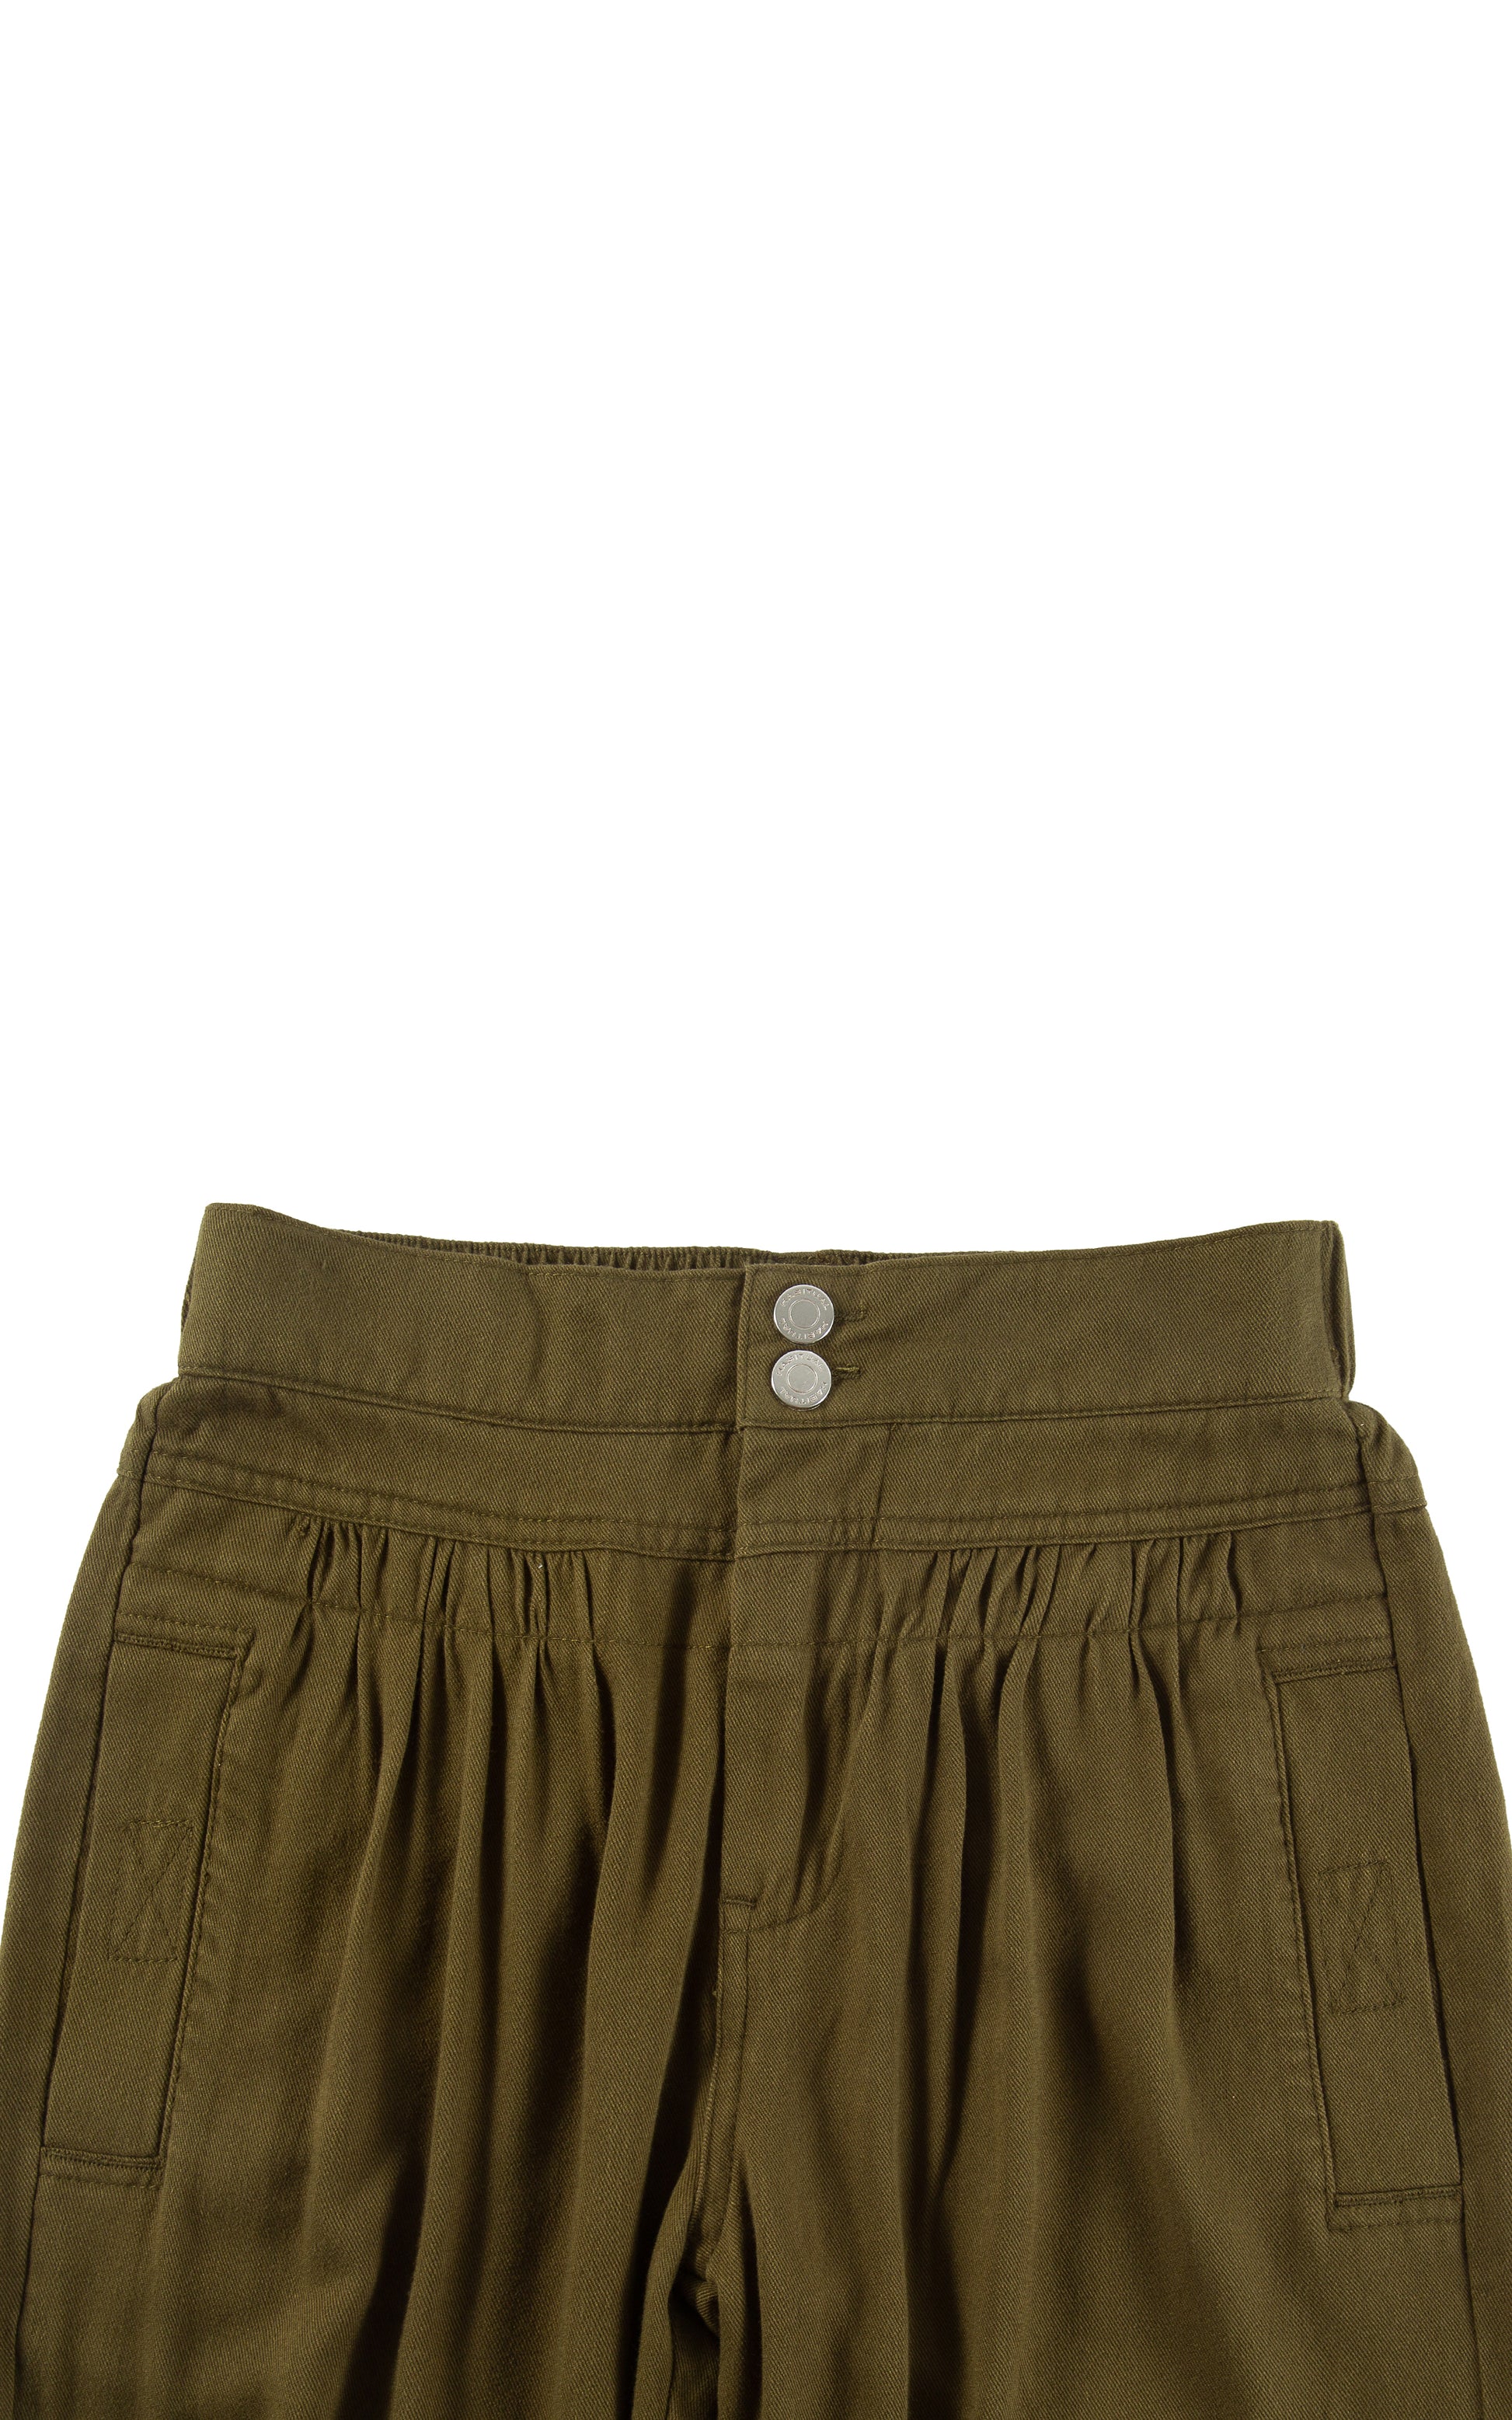 Close up of olive cargo pants waistband.